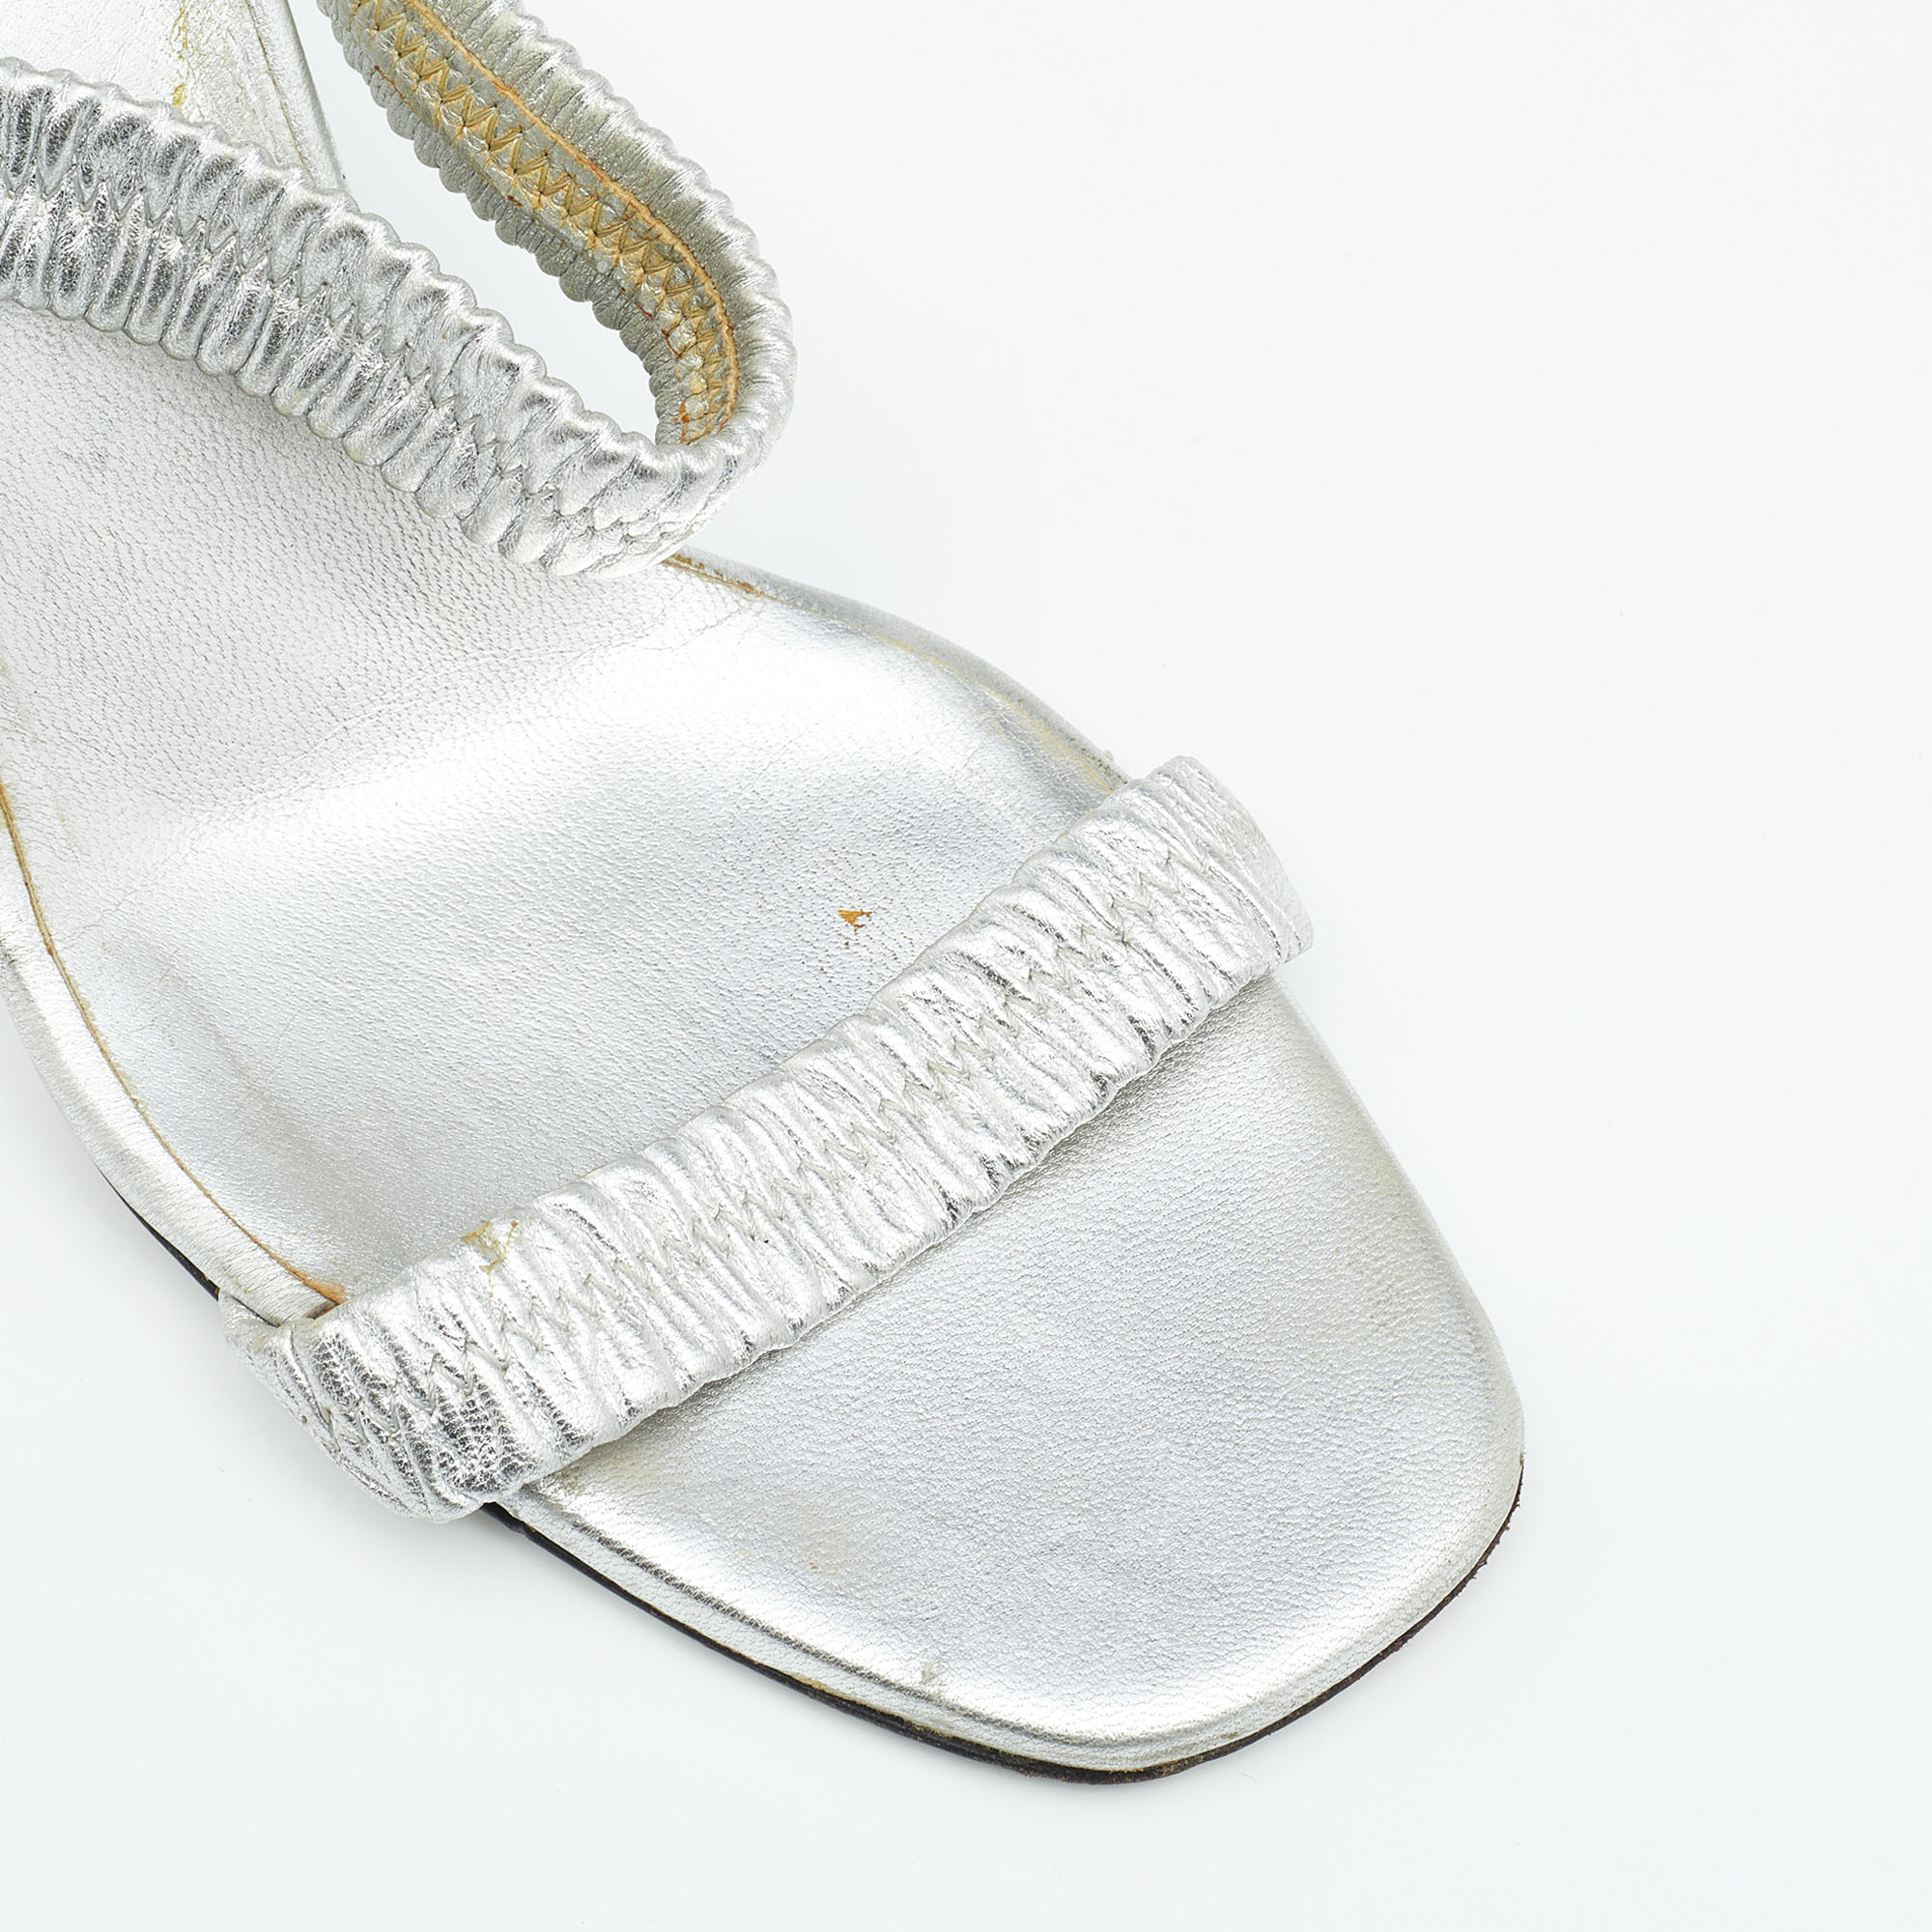 Prada Silver Leather Slide Sandals Size 37.5